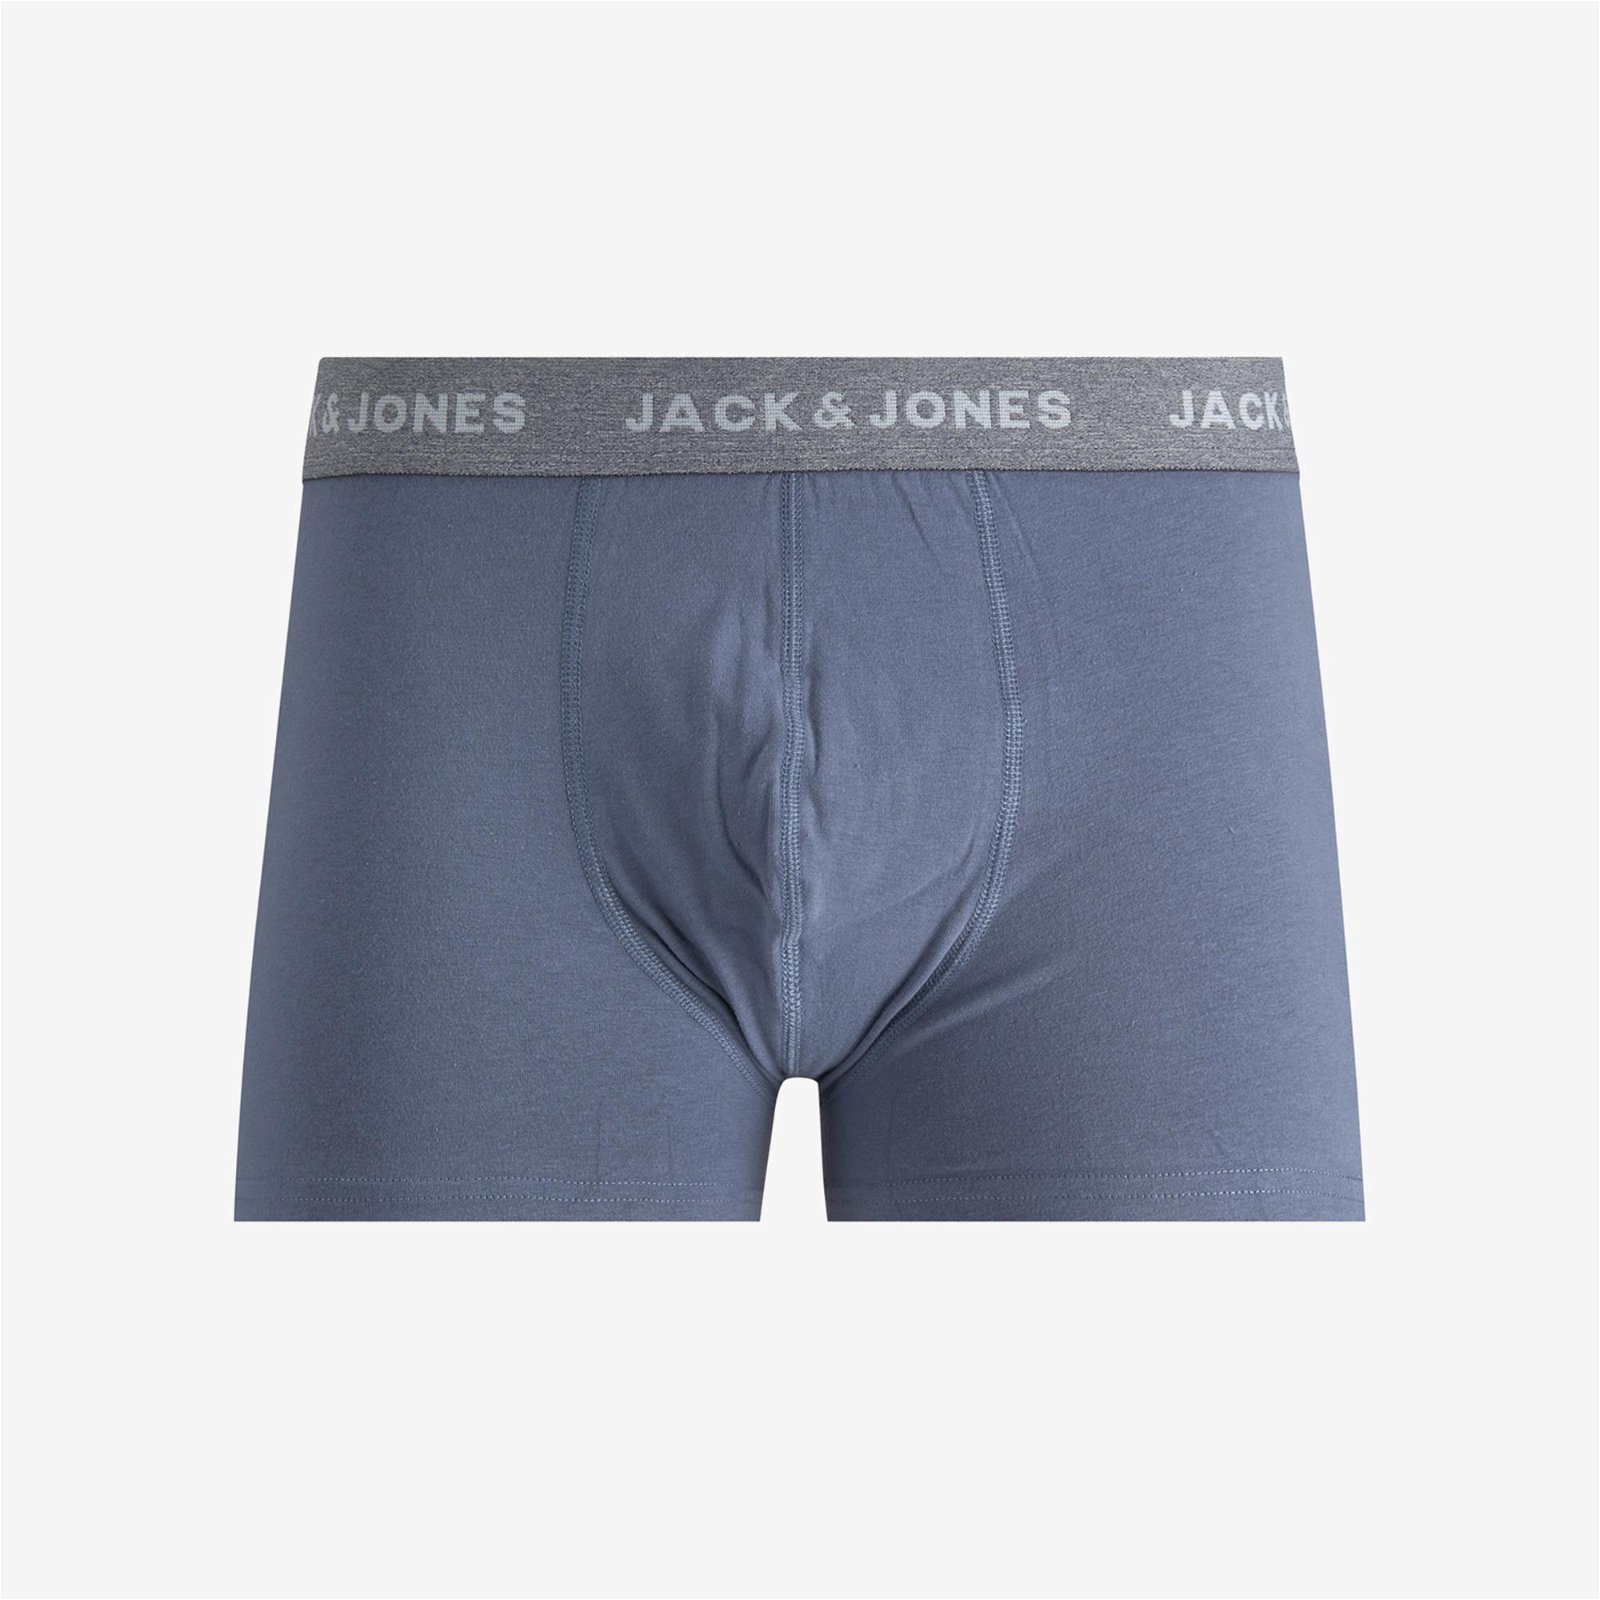 Jack & Jones Jacserge Erkek Mavi Boxer